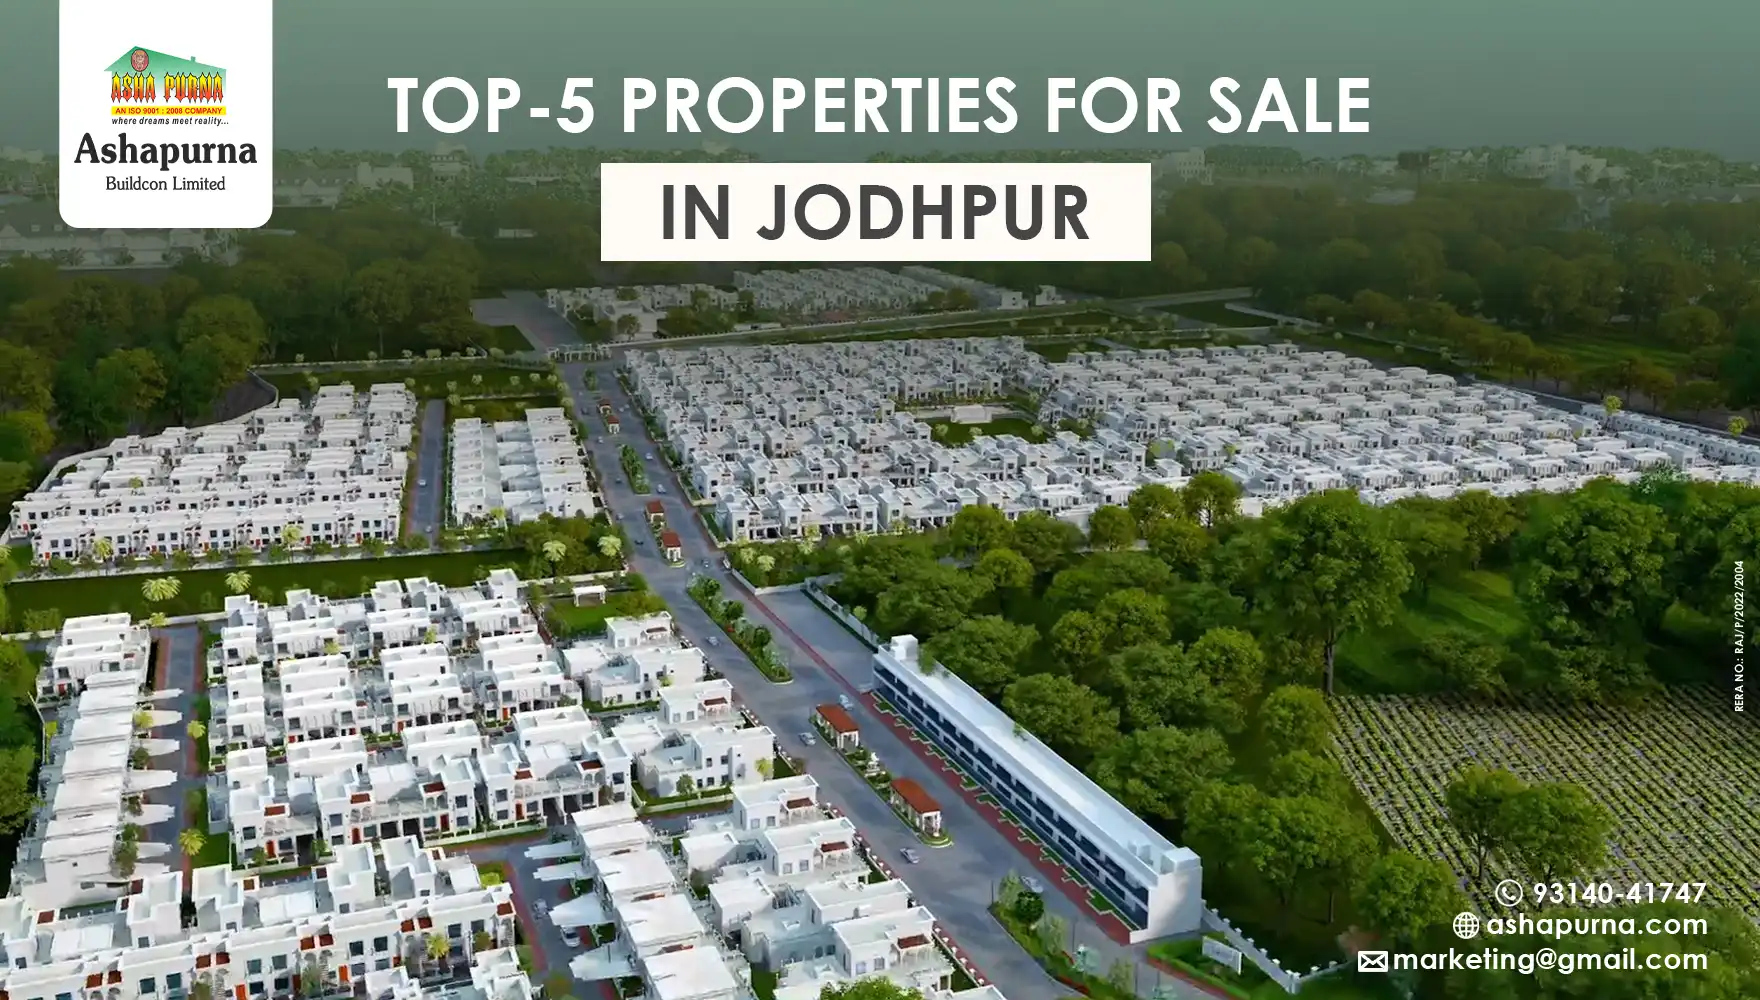 Top 5 Properties For Sale In Jodhpur Blog Image